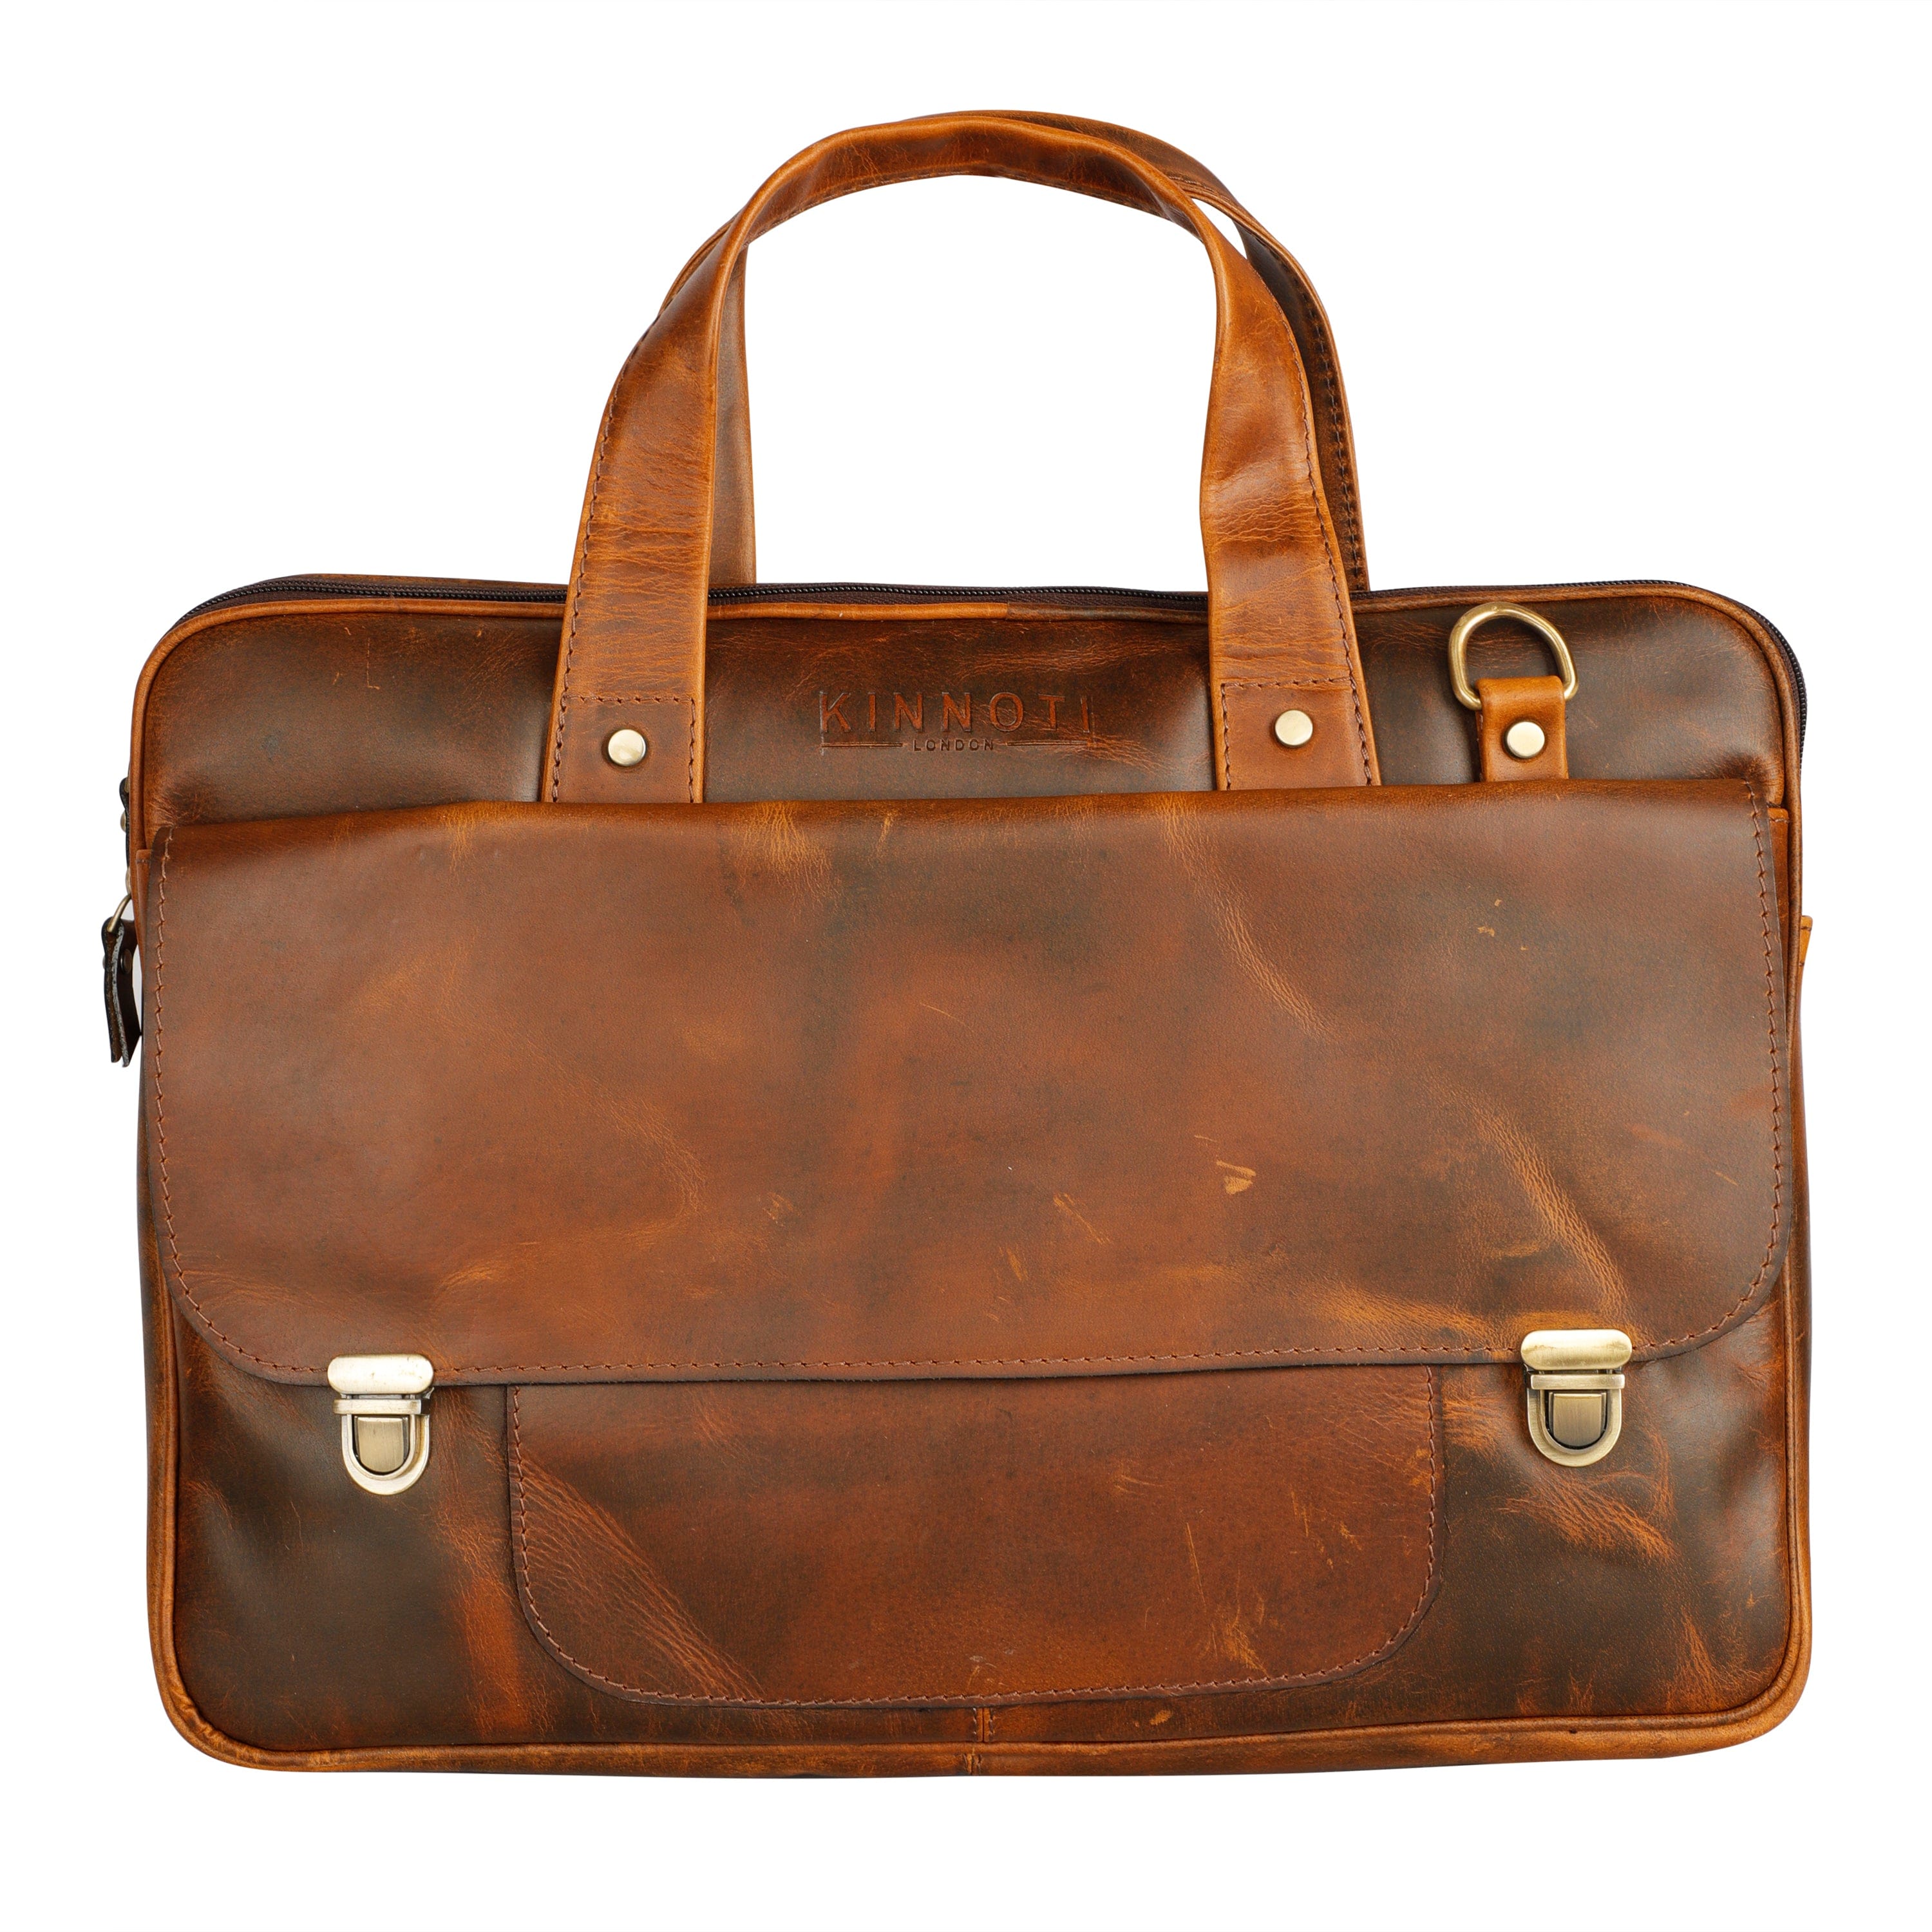 Kinnoti LAPTOP BAGS Genuine Leather Executive Briefcase Luxury Laptop Bag